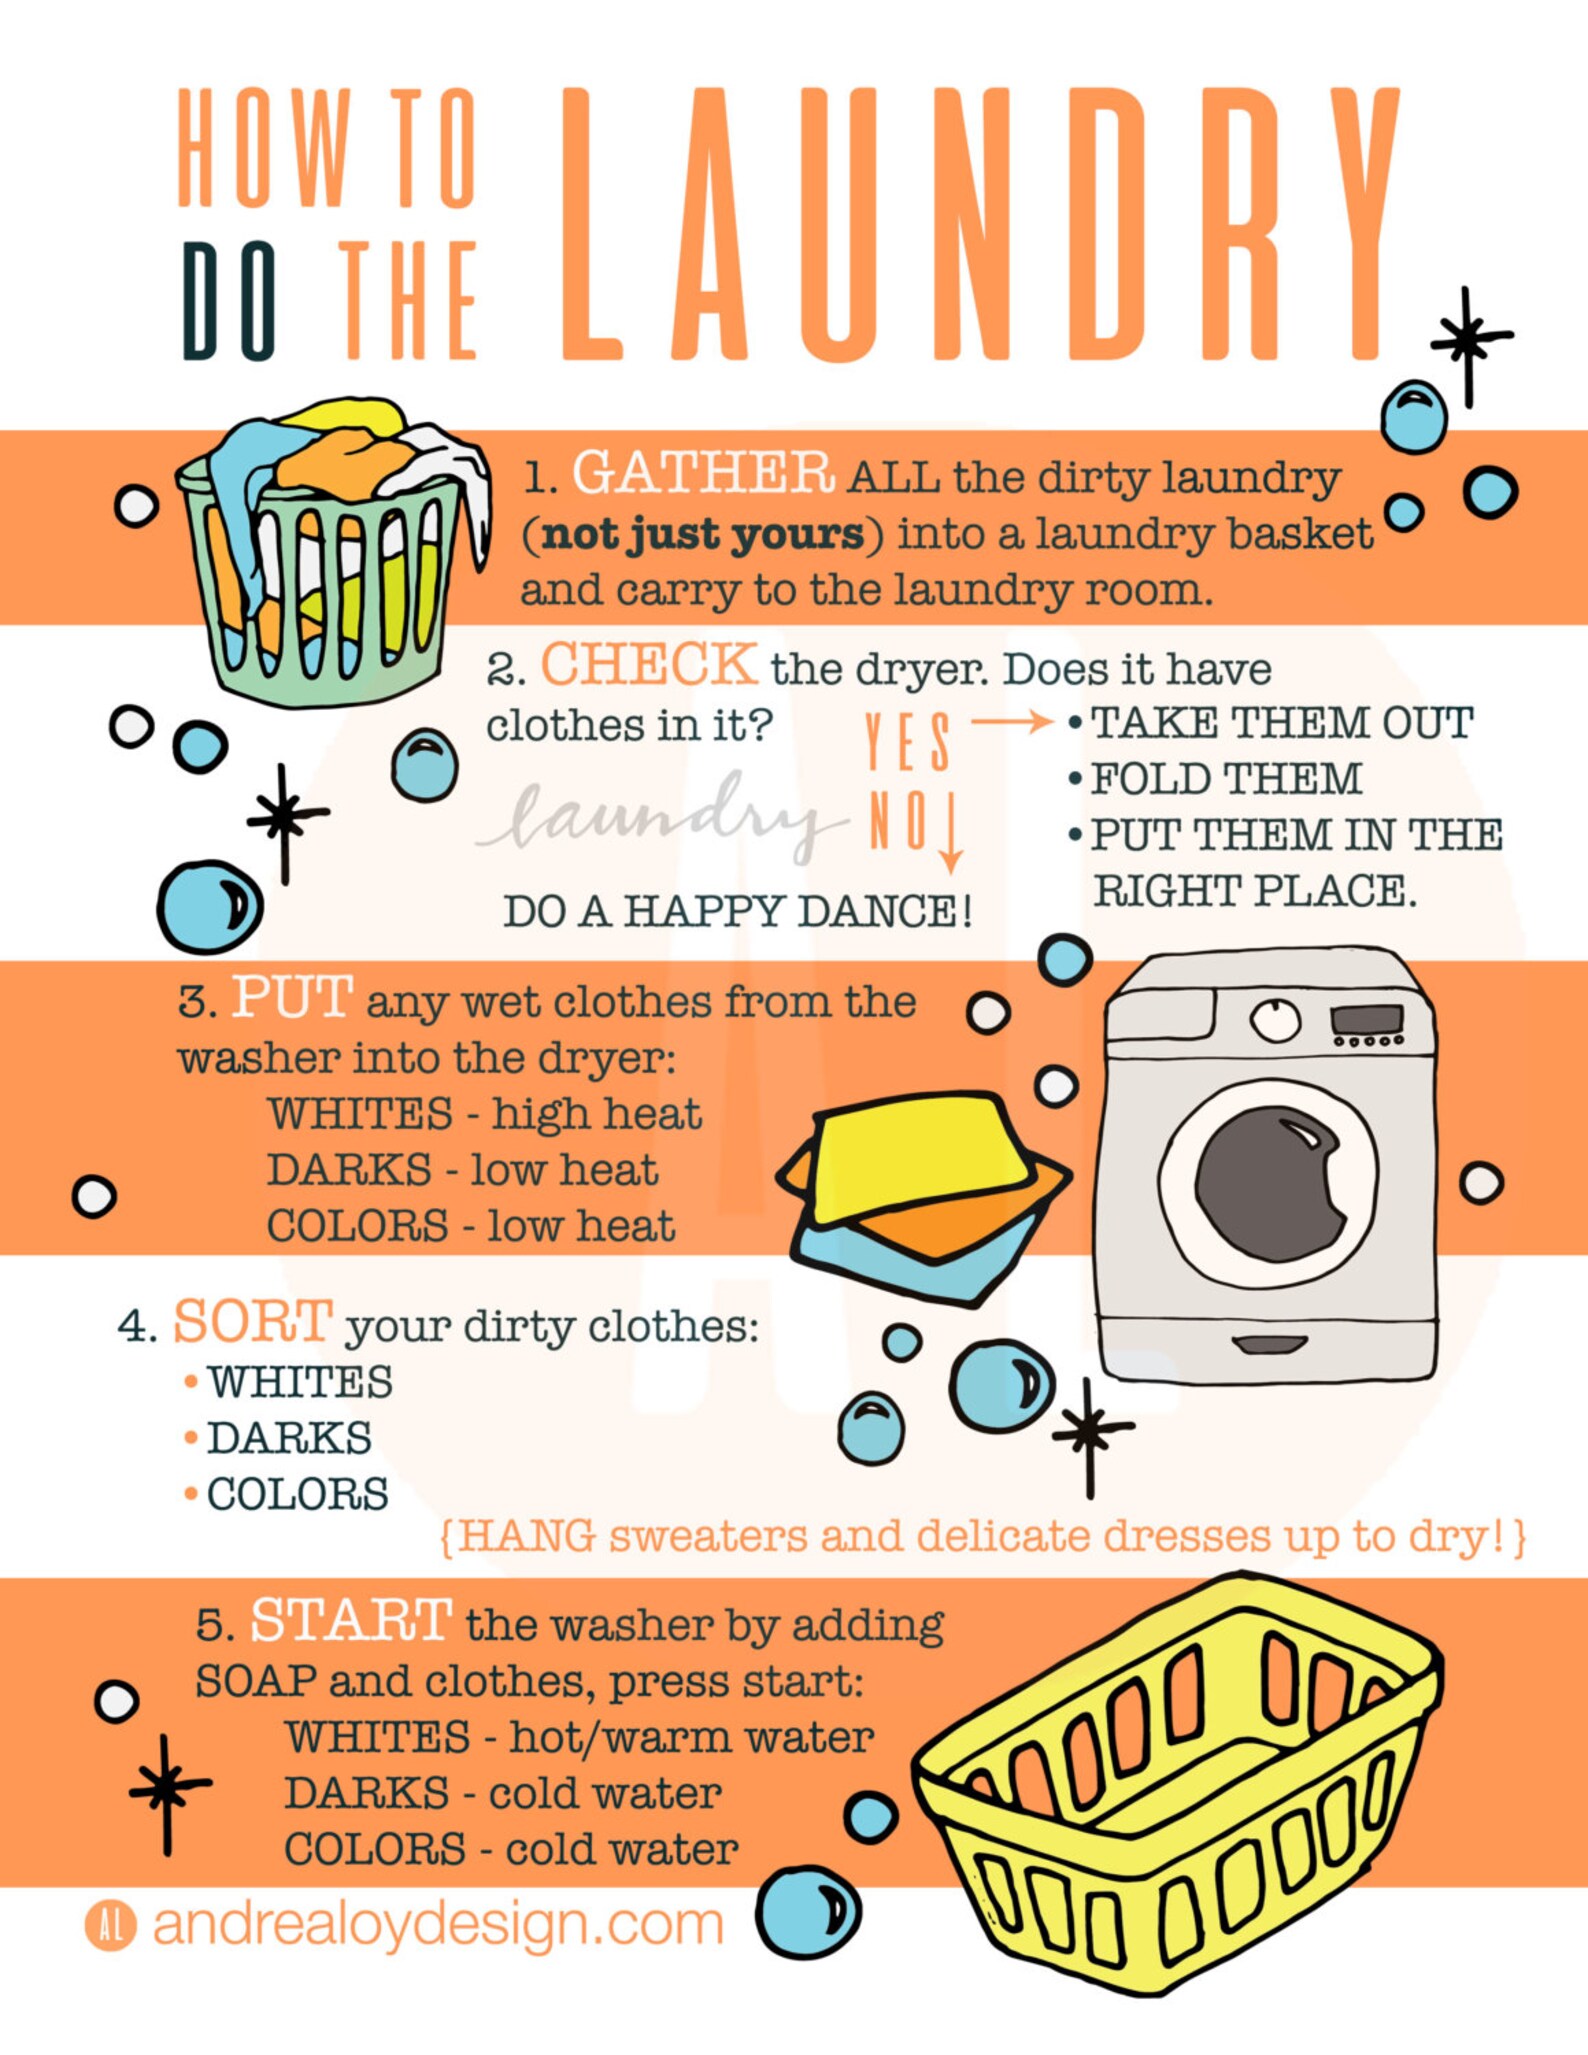 Laundry перевод на русский. Инфографика стирка. Инфографика прачки. To do the Laundry. Laundry перевод.